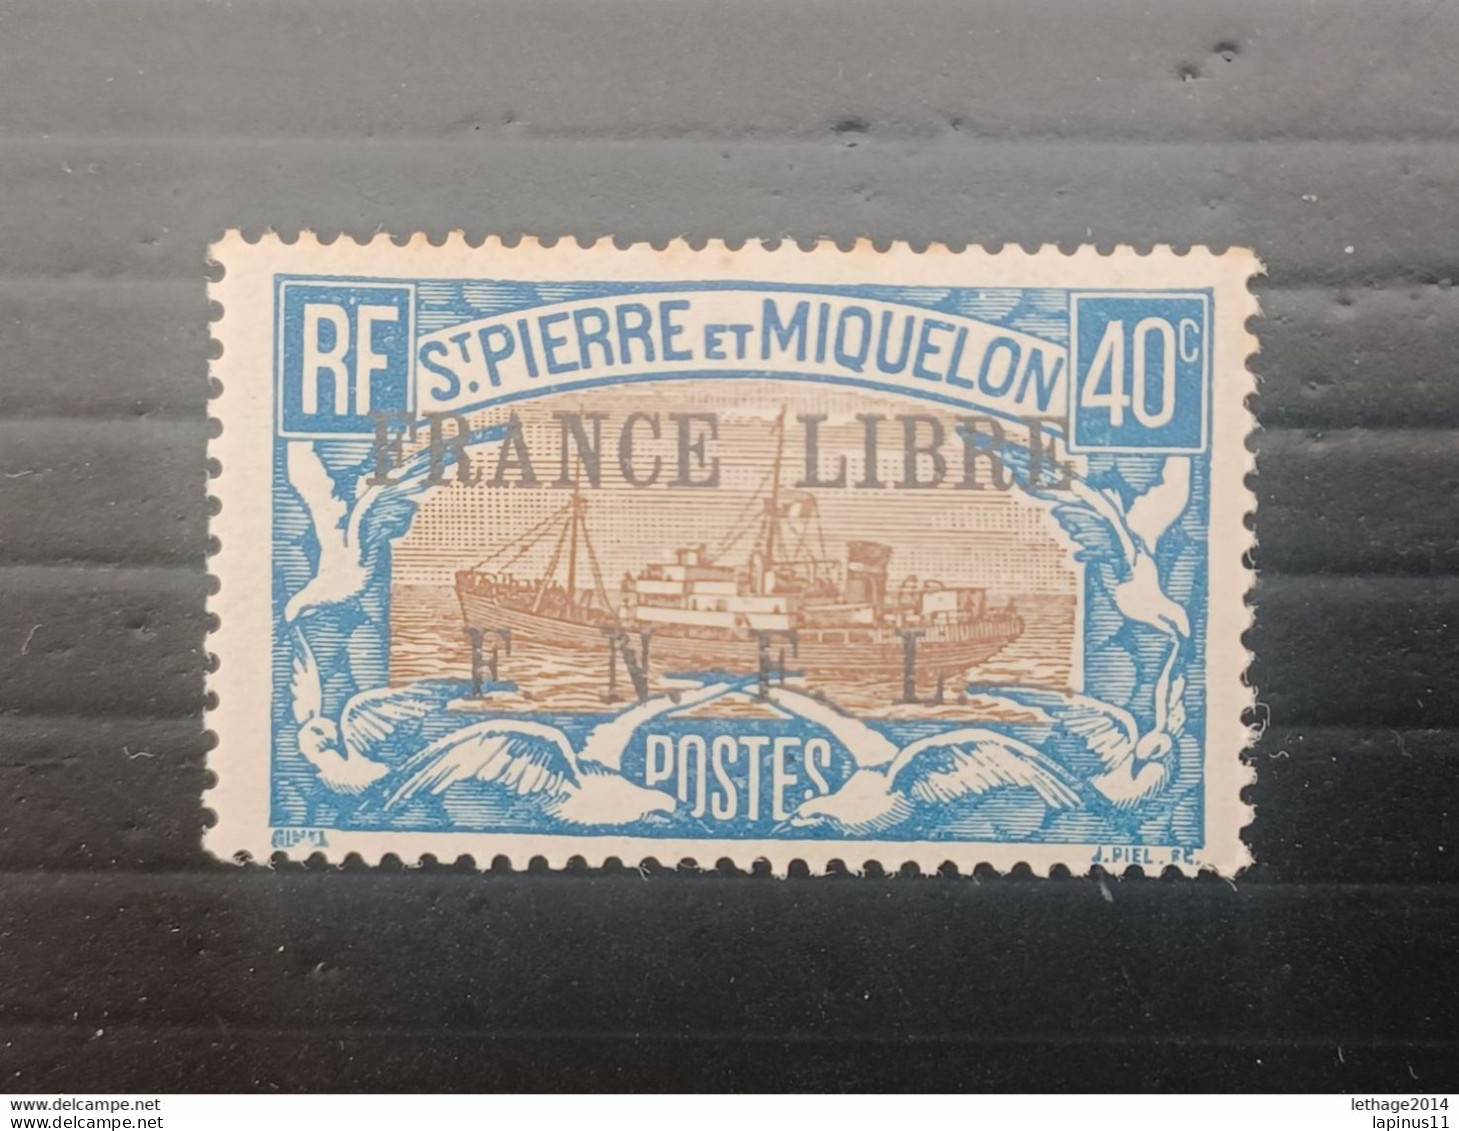 ST PIERRE ET MIQUELLON 1941 STAMPS OF 1922 OVERPRINT FRANCE LIBRE F N F L CAT. YVERT N. 243 MNH - Unused Stamps